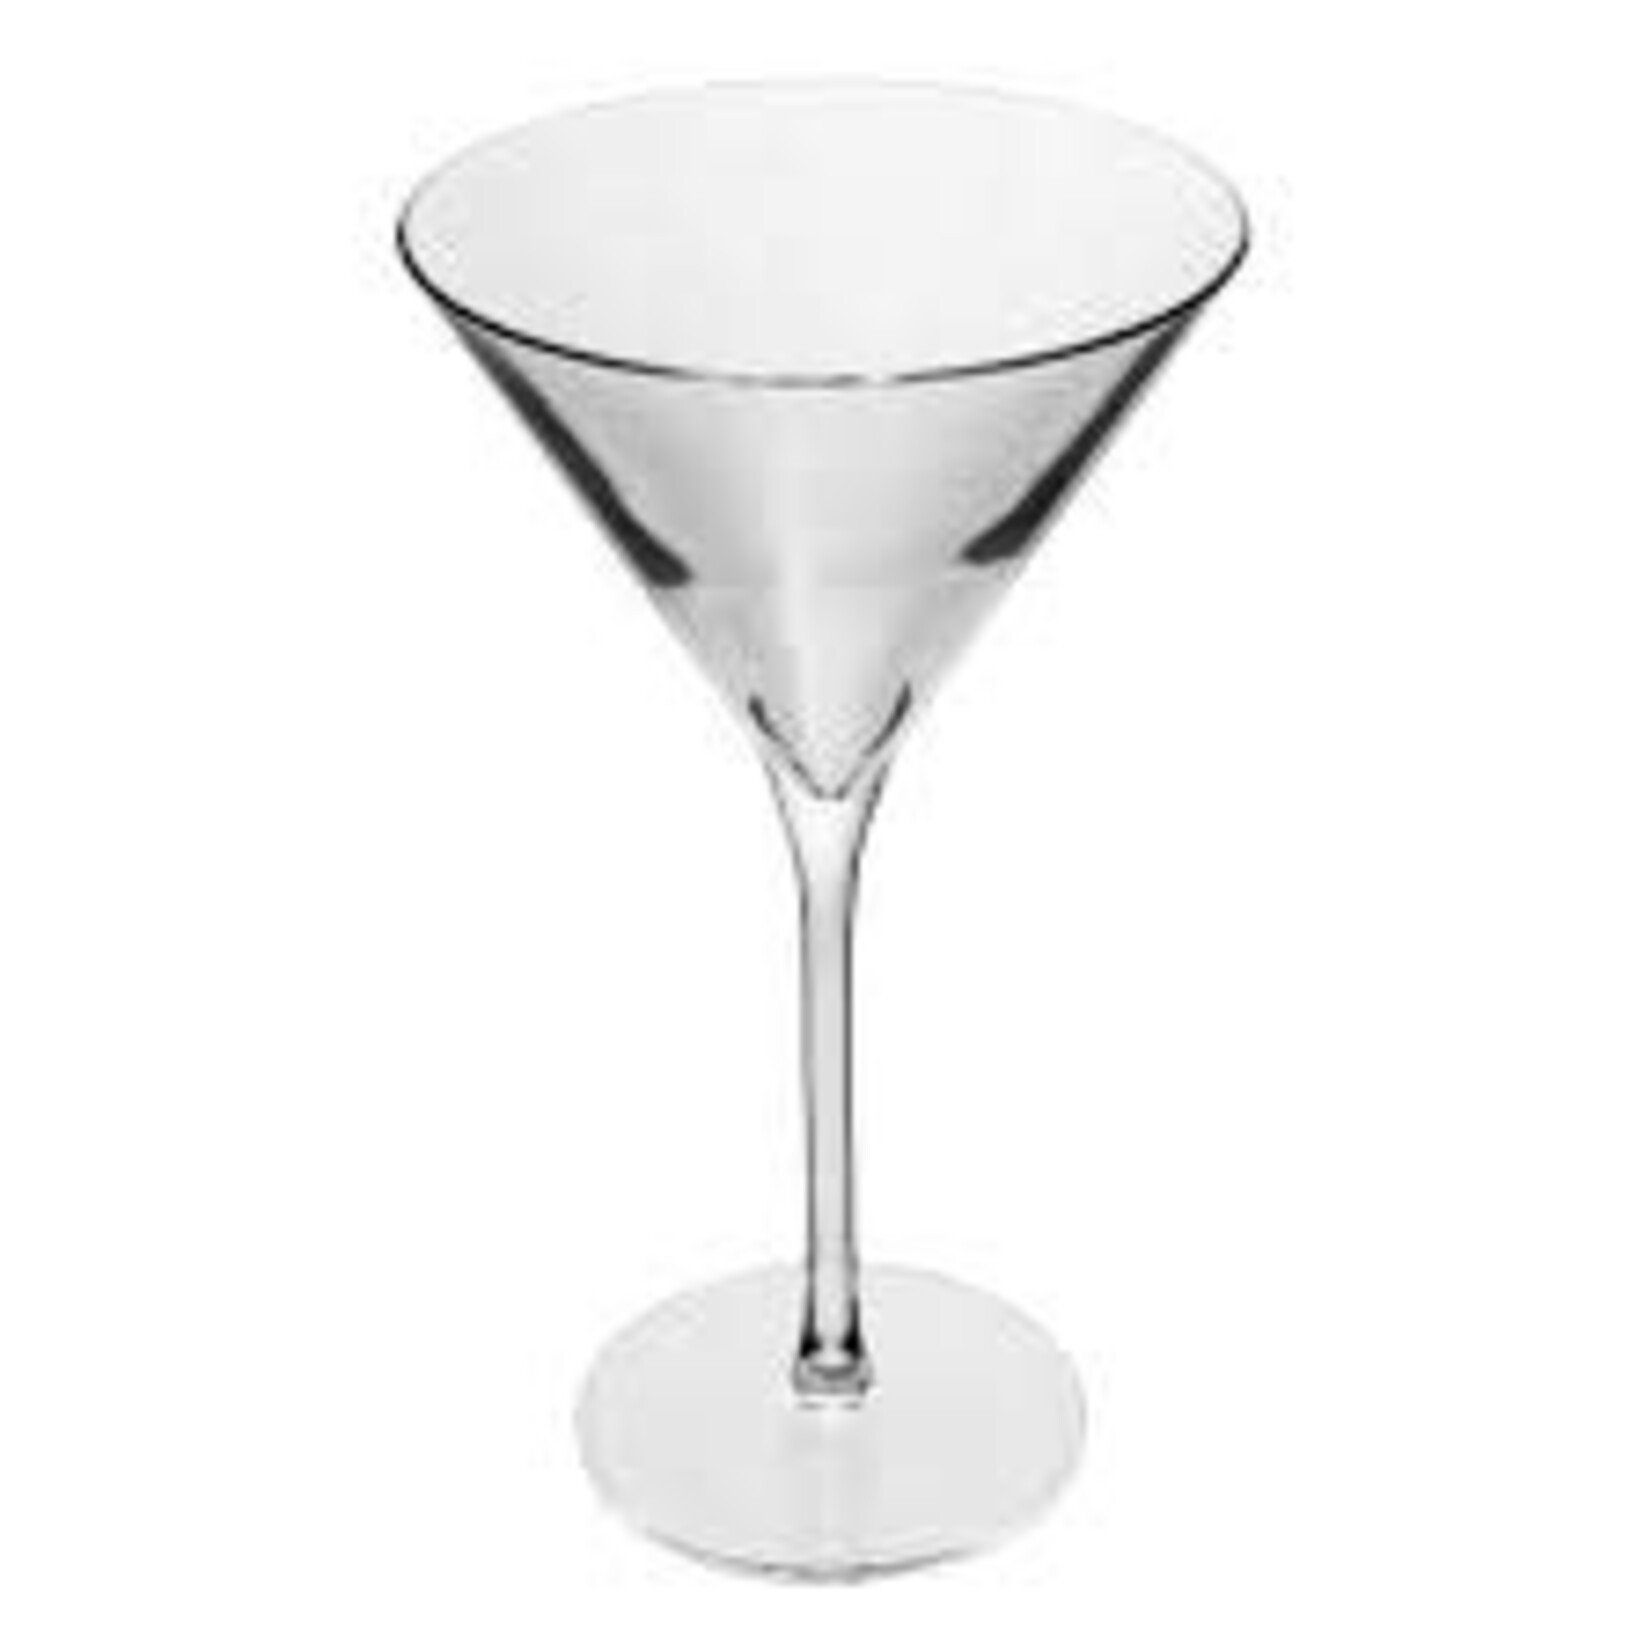 LIBBEY 9135 Libbey 7 oz martini   glass 12/case